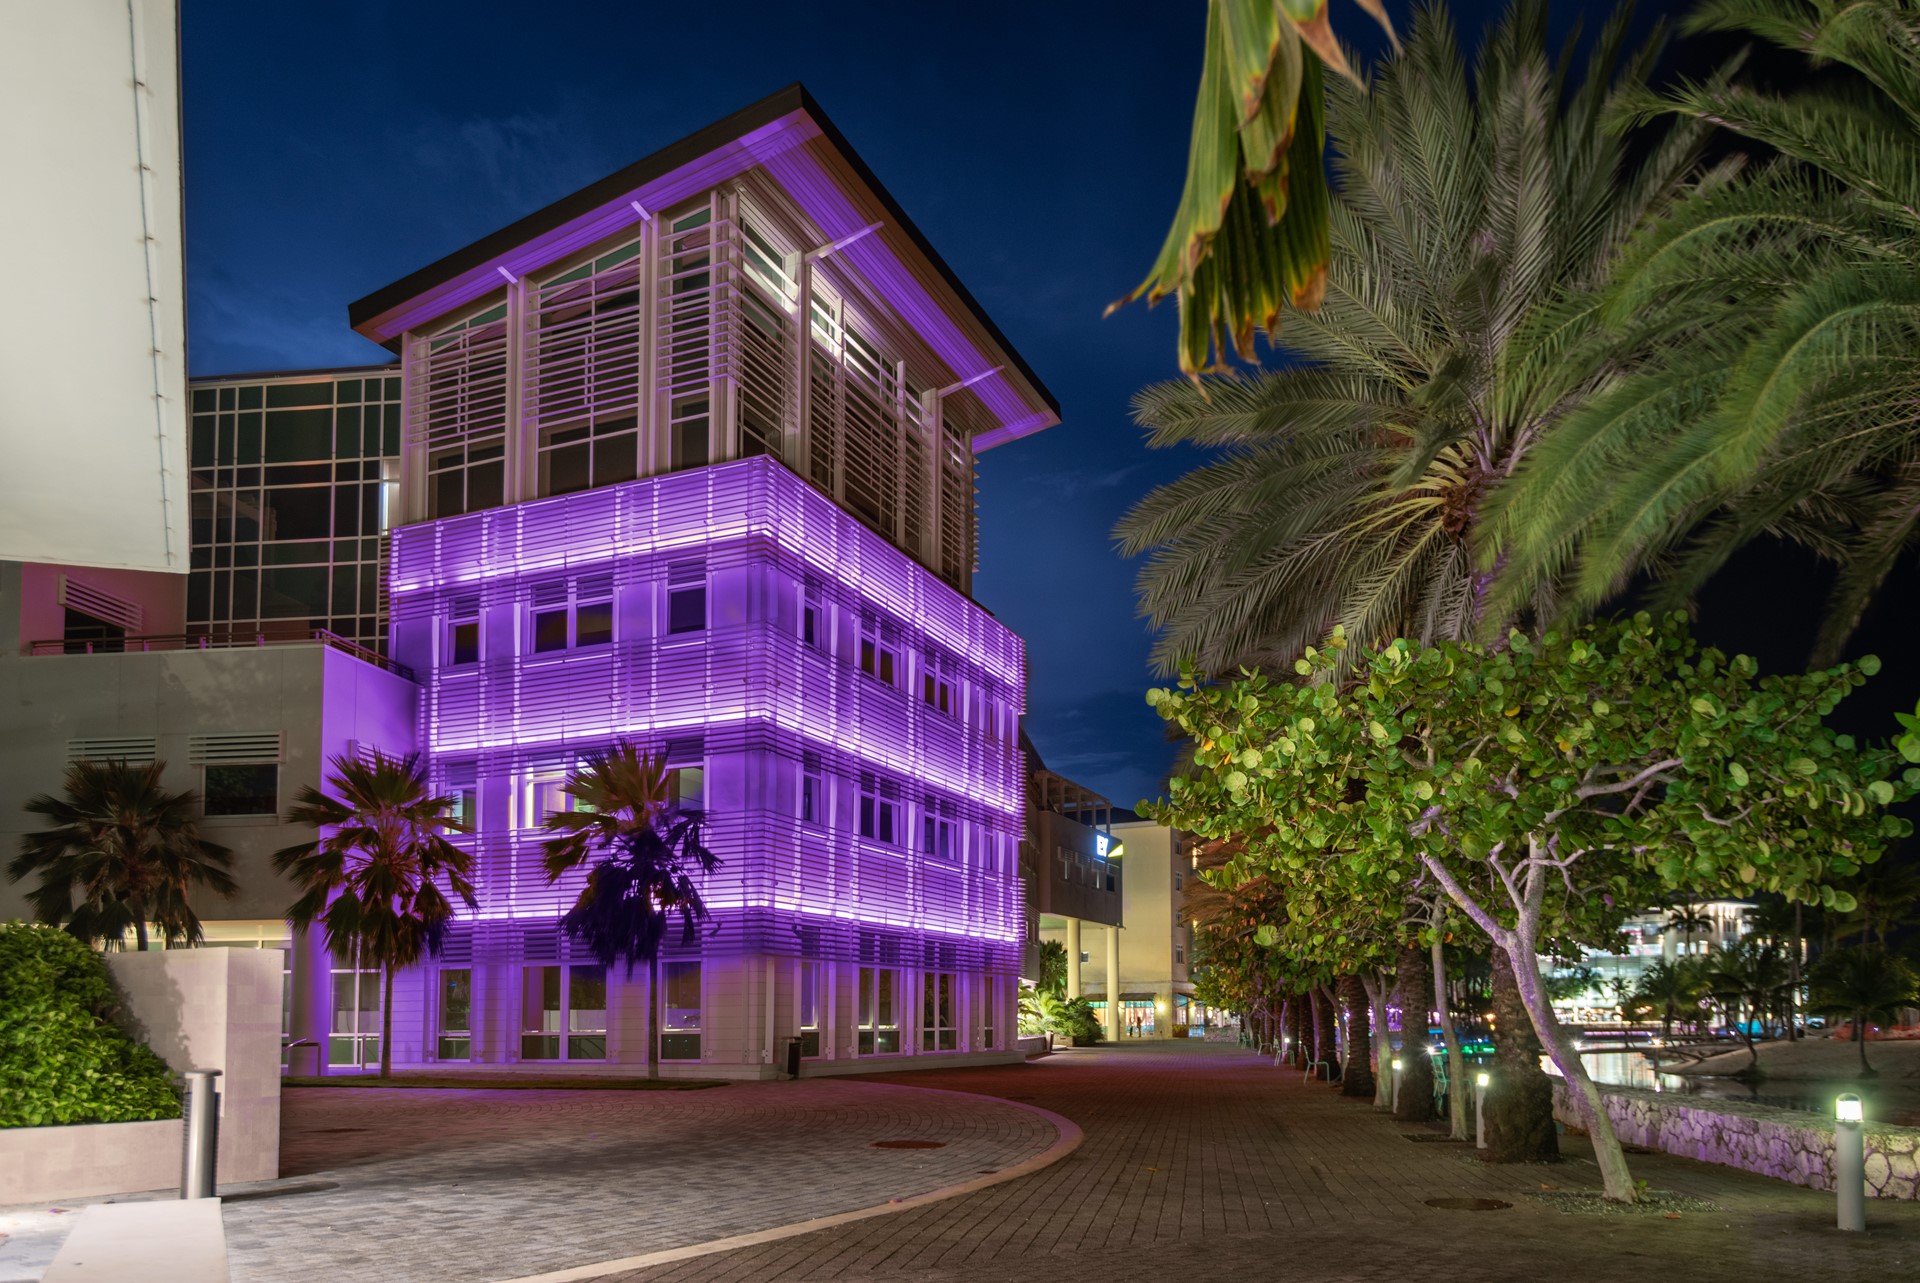 building lit up in purple